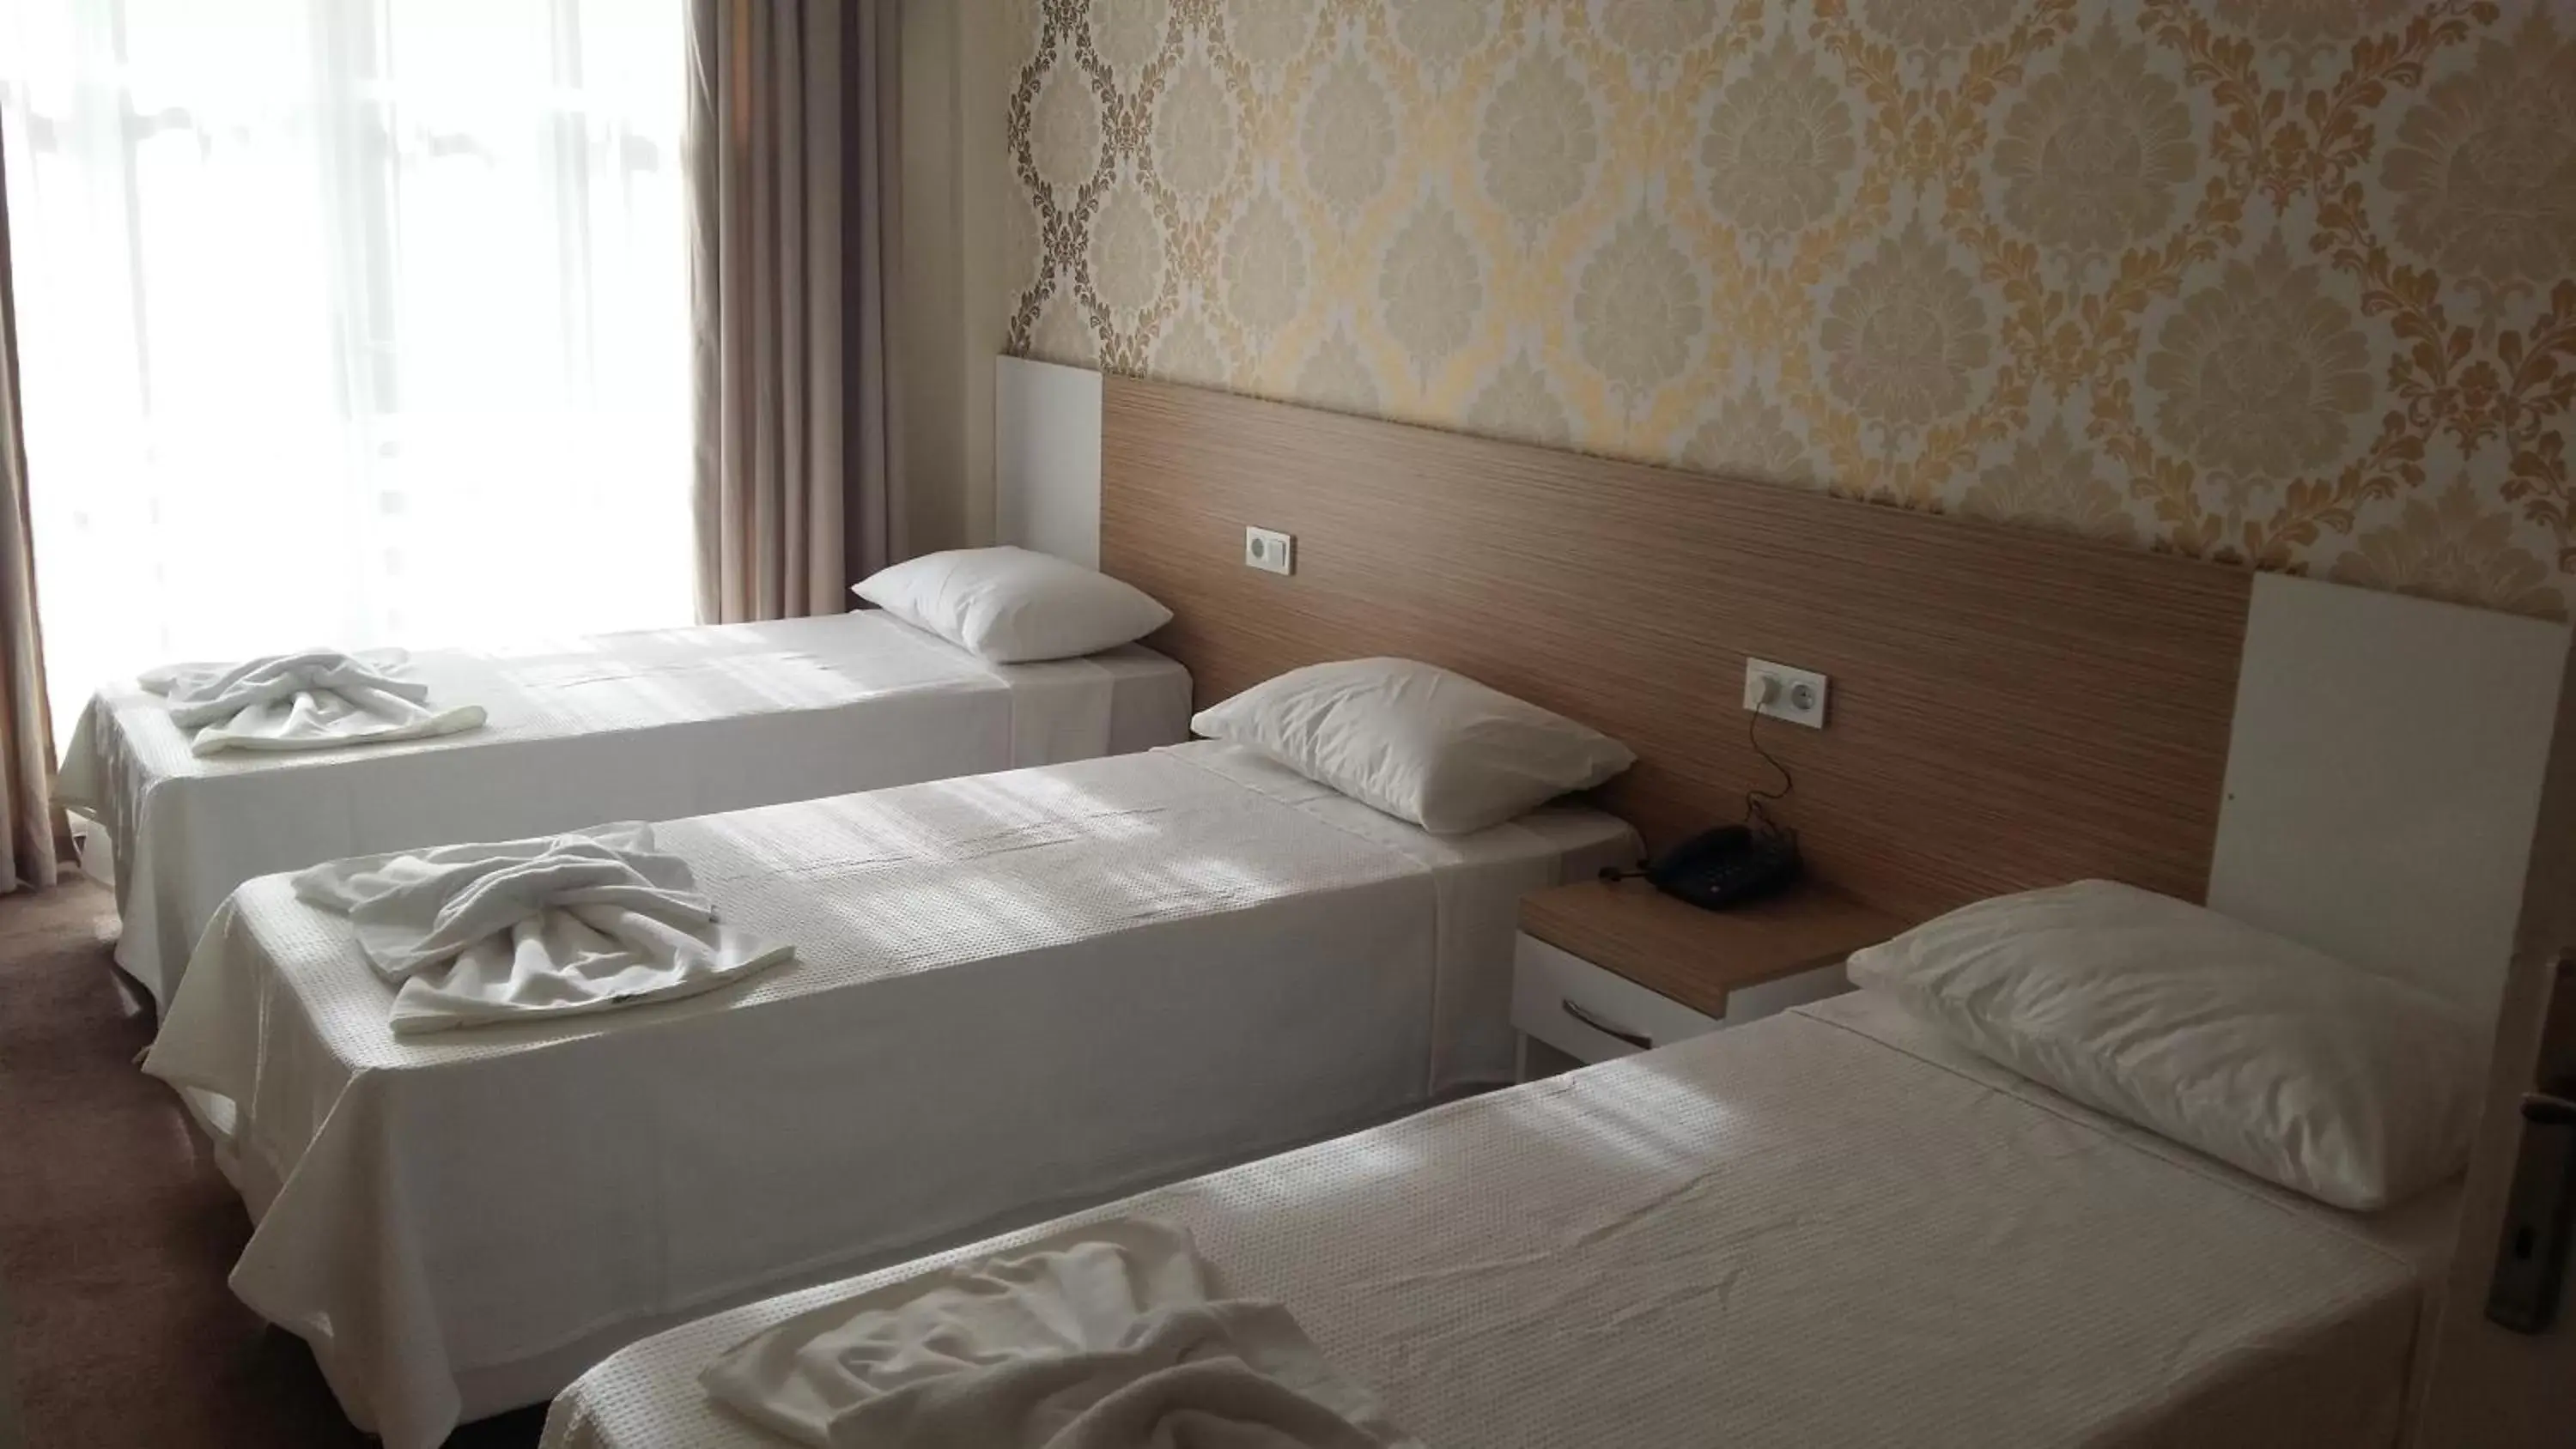 Bed in 4-Bed Dormitory Room in Nicea Hotel